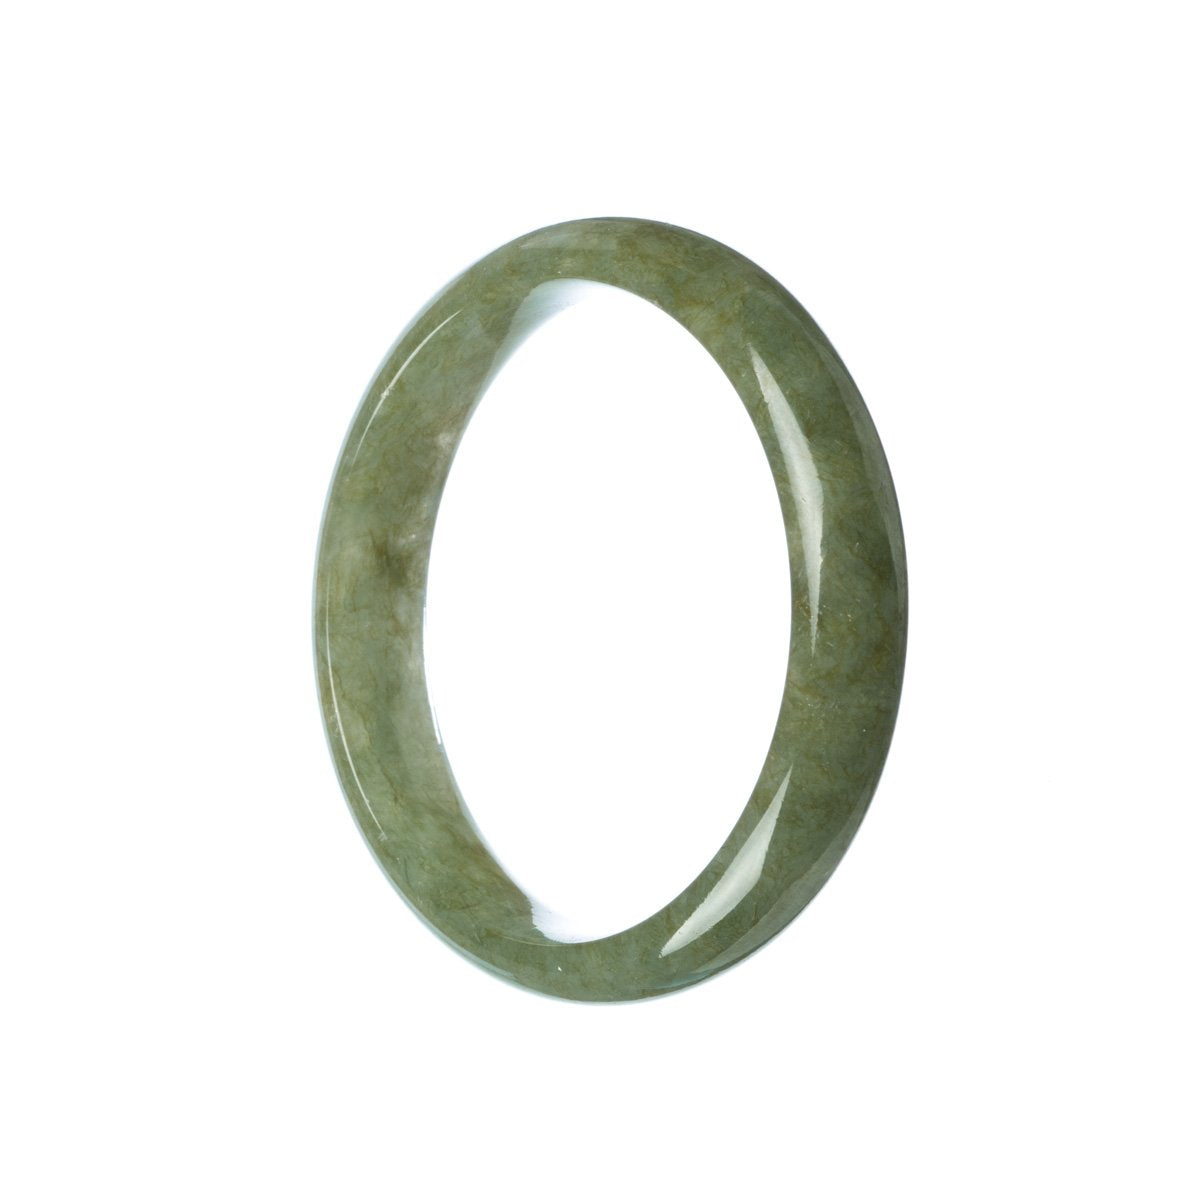 A high-quality green jadeite bracelet with a 57mm half-moon design.